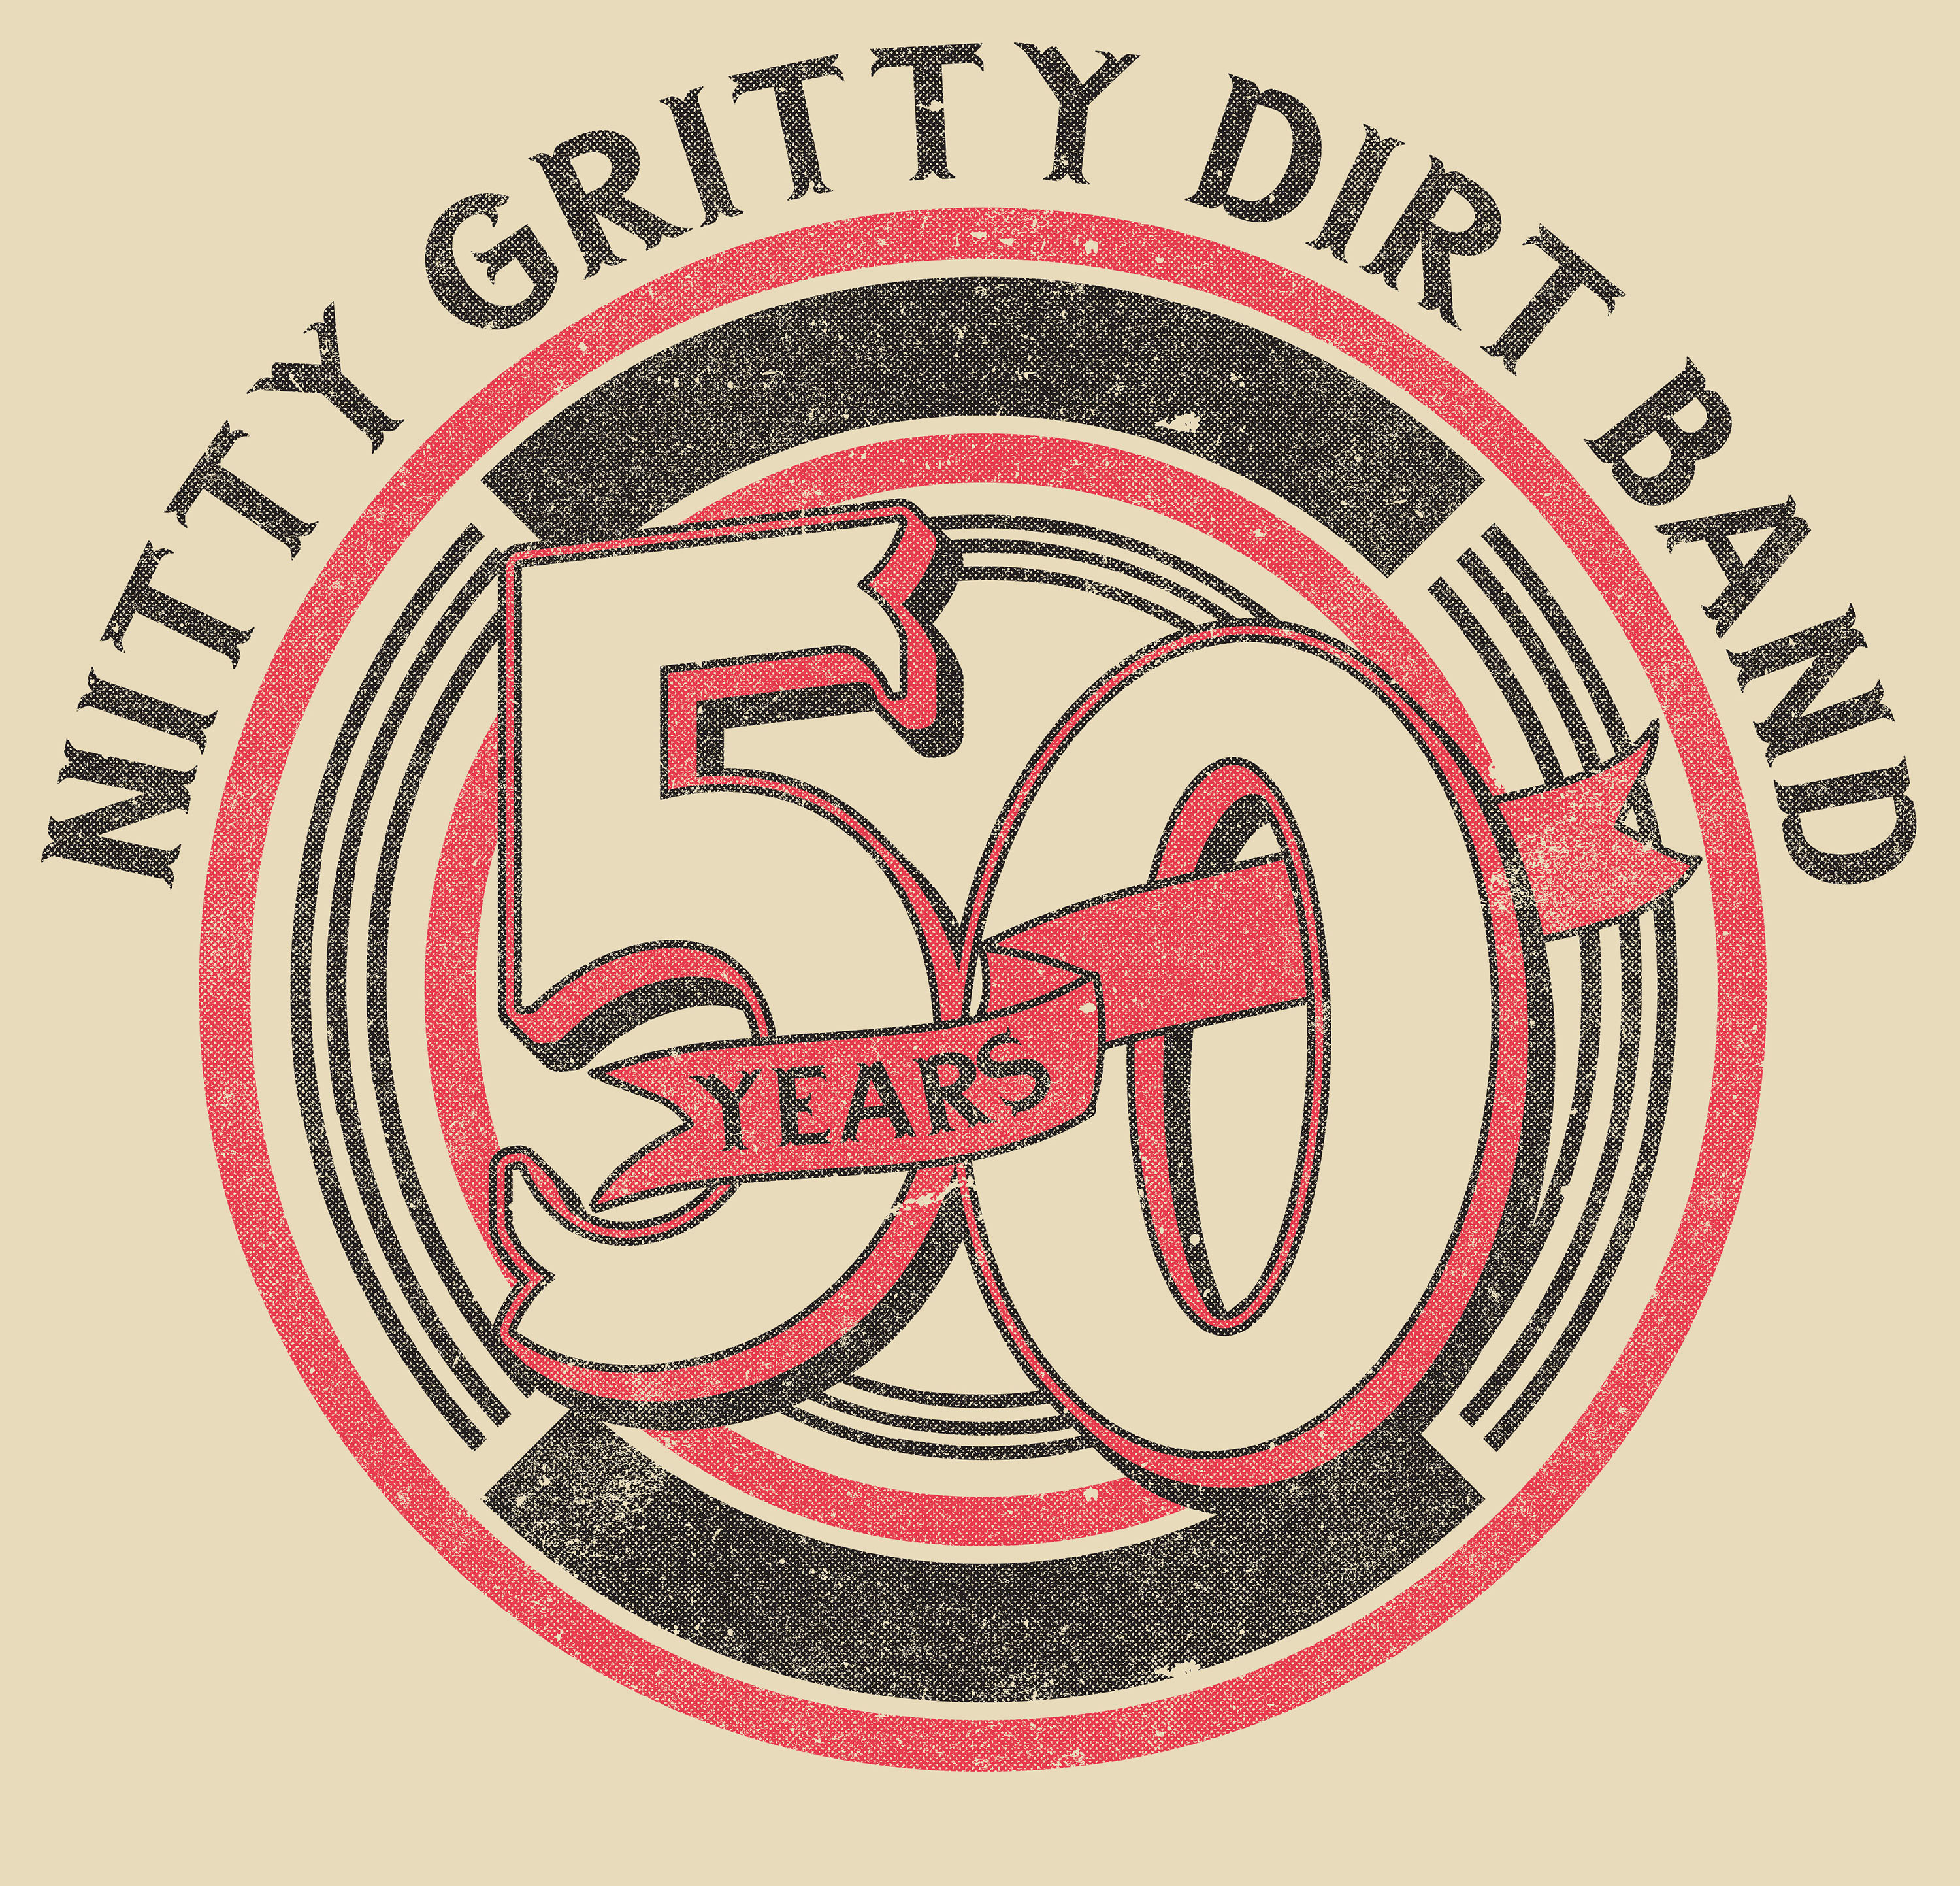 Nitty Gritty Dirt Band Logo